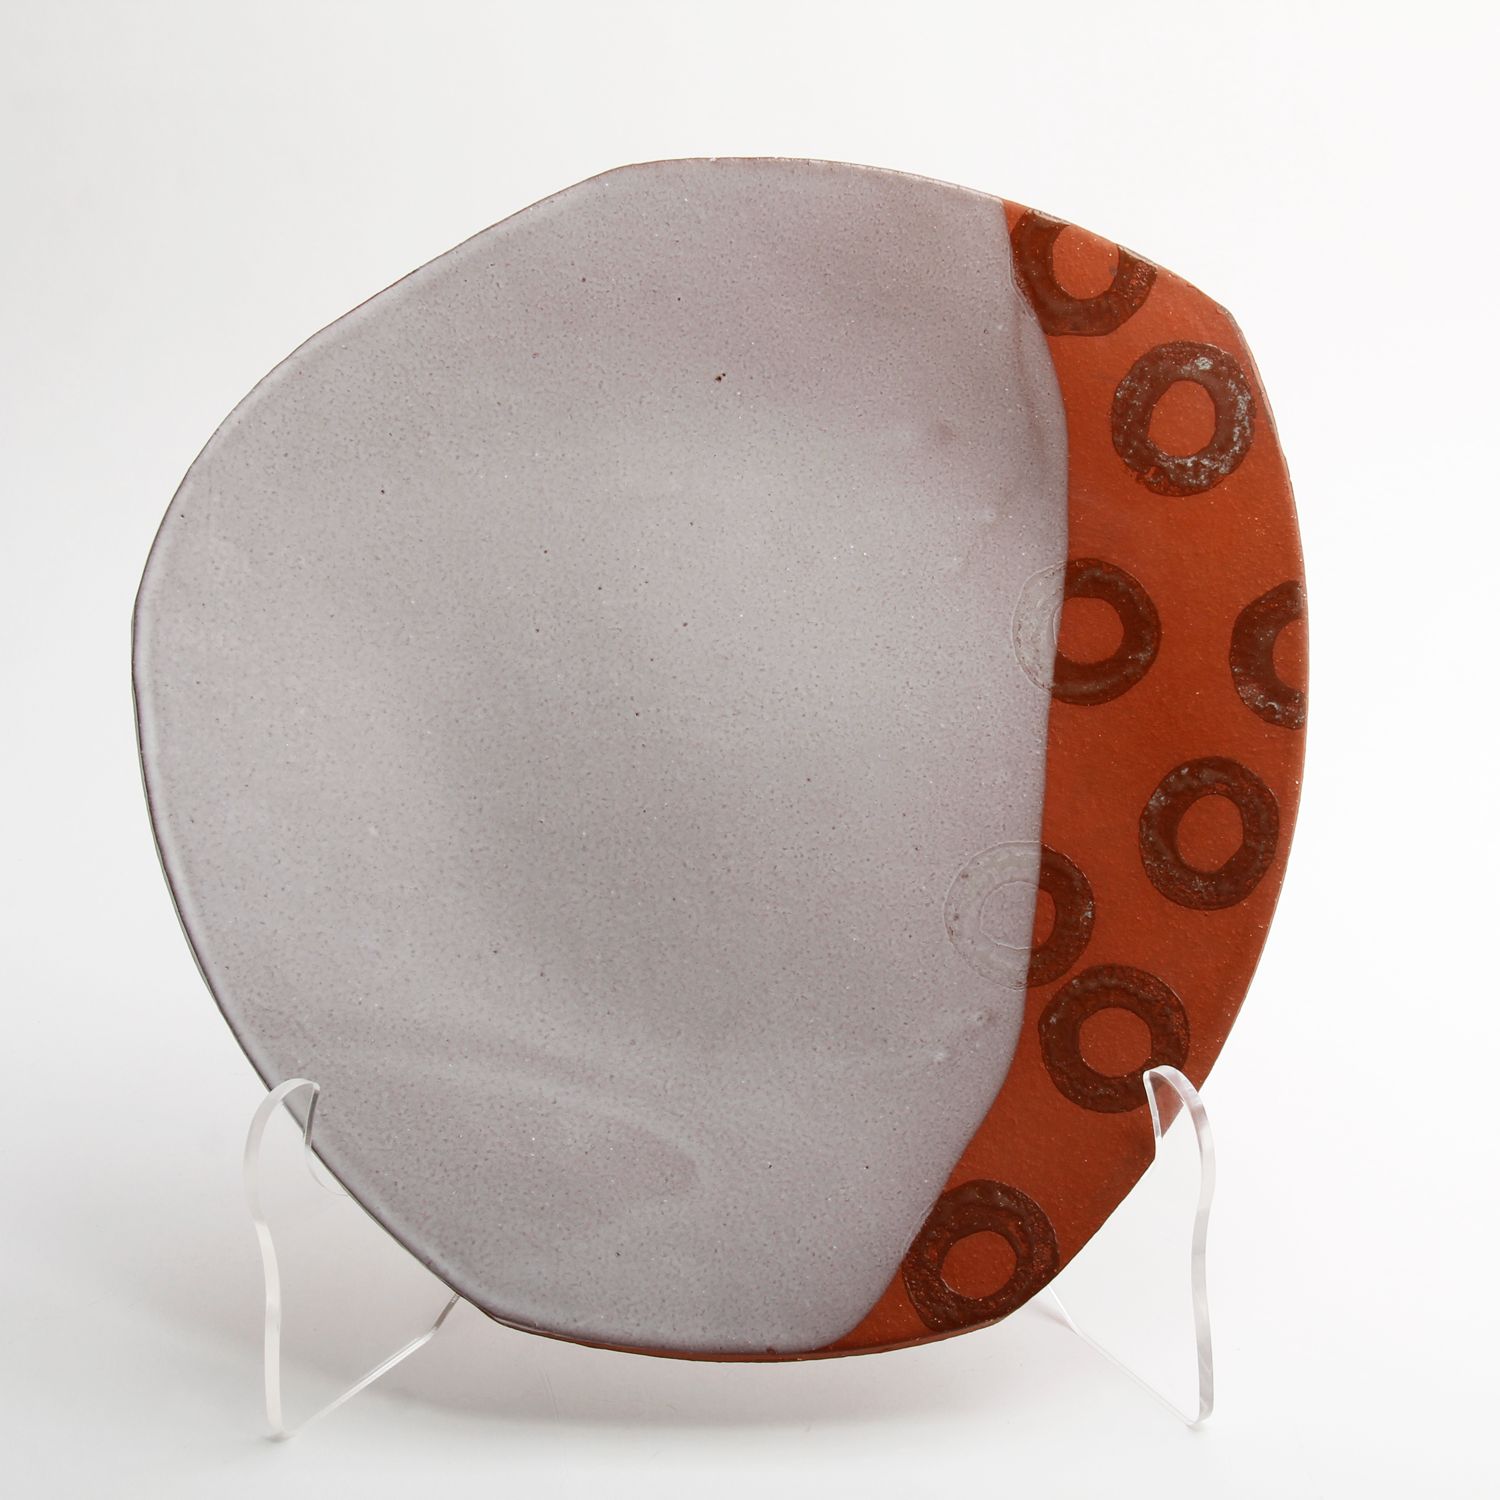 Mary McKenzie: Large Platter – Black Circles Product Image 1 of 2